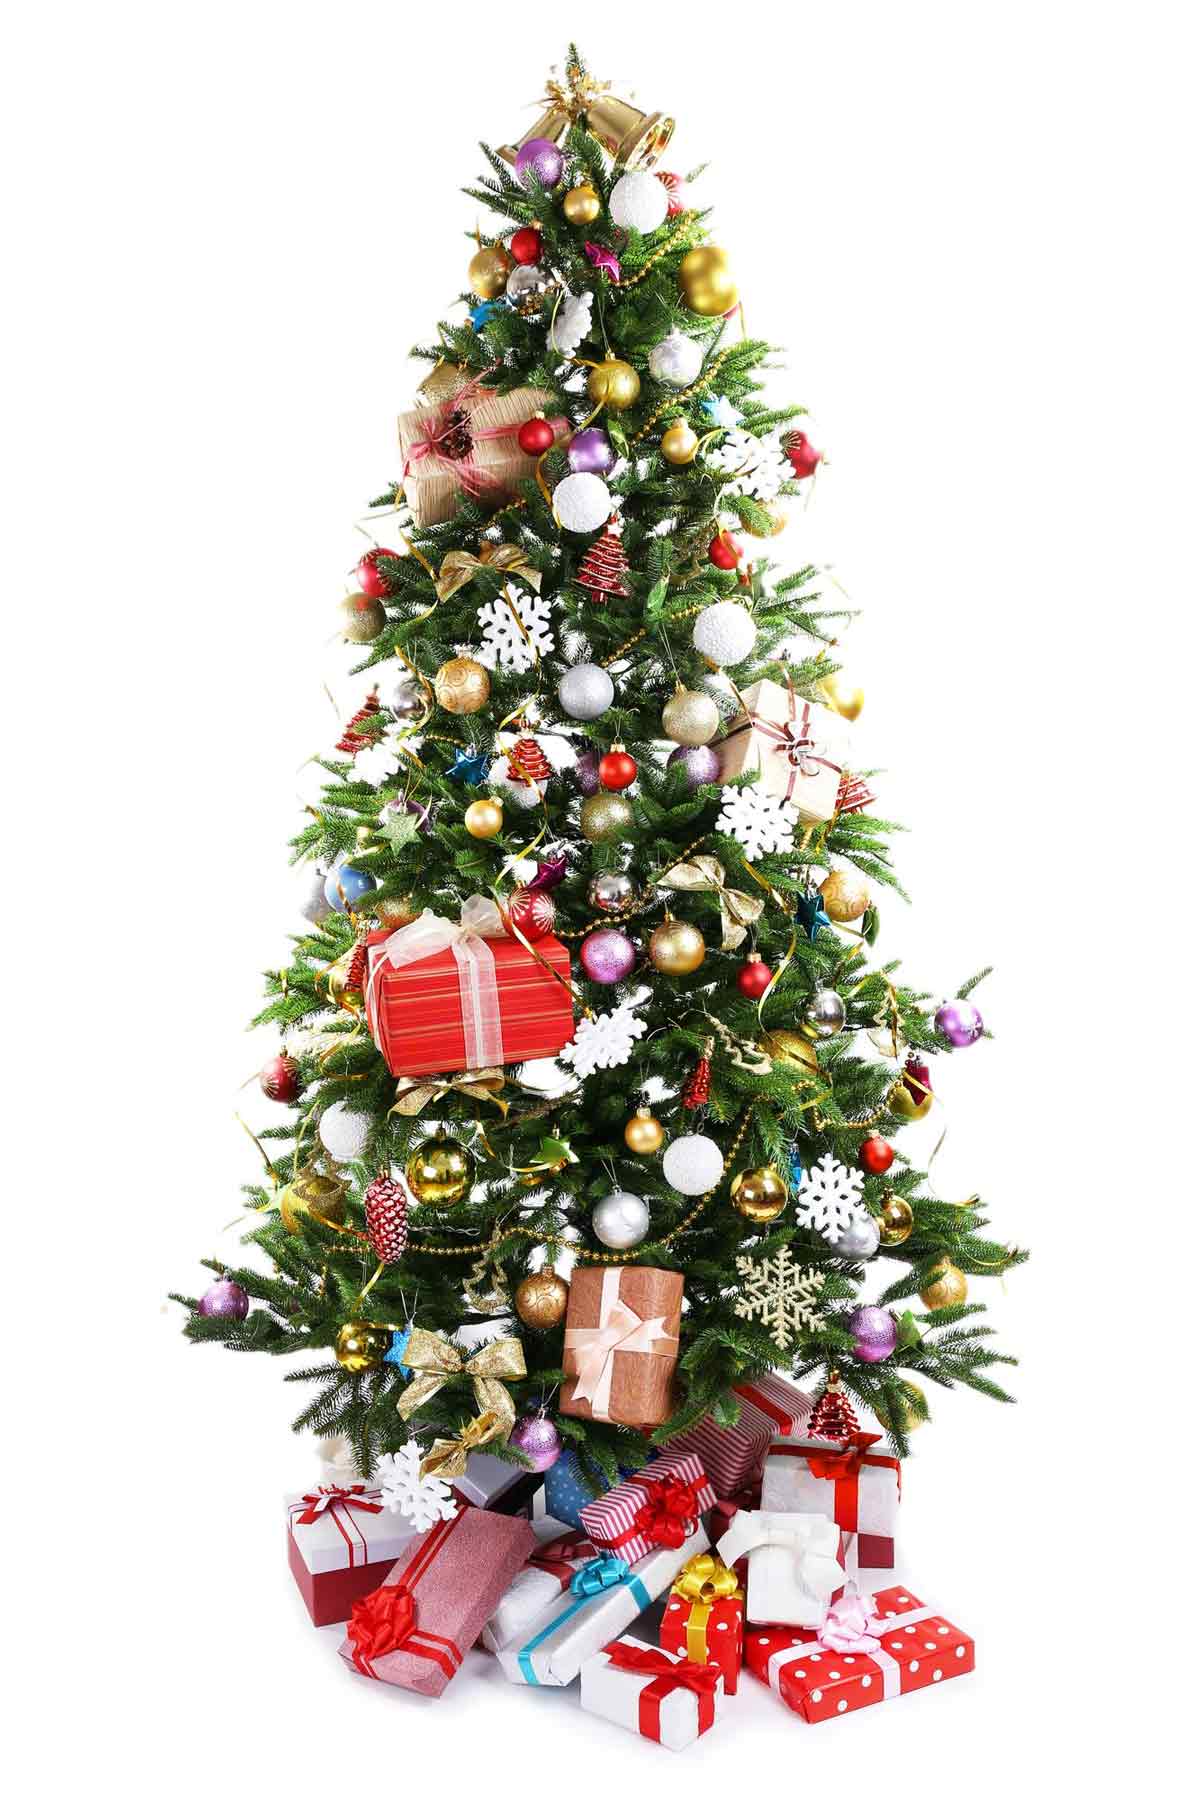 Christmas tree decoration ideas | Christmas Tree Decor Ideas ...